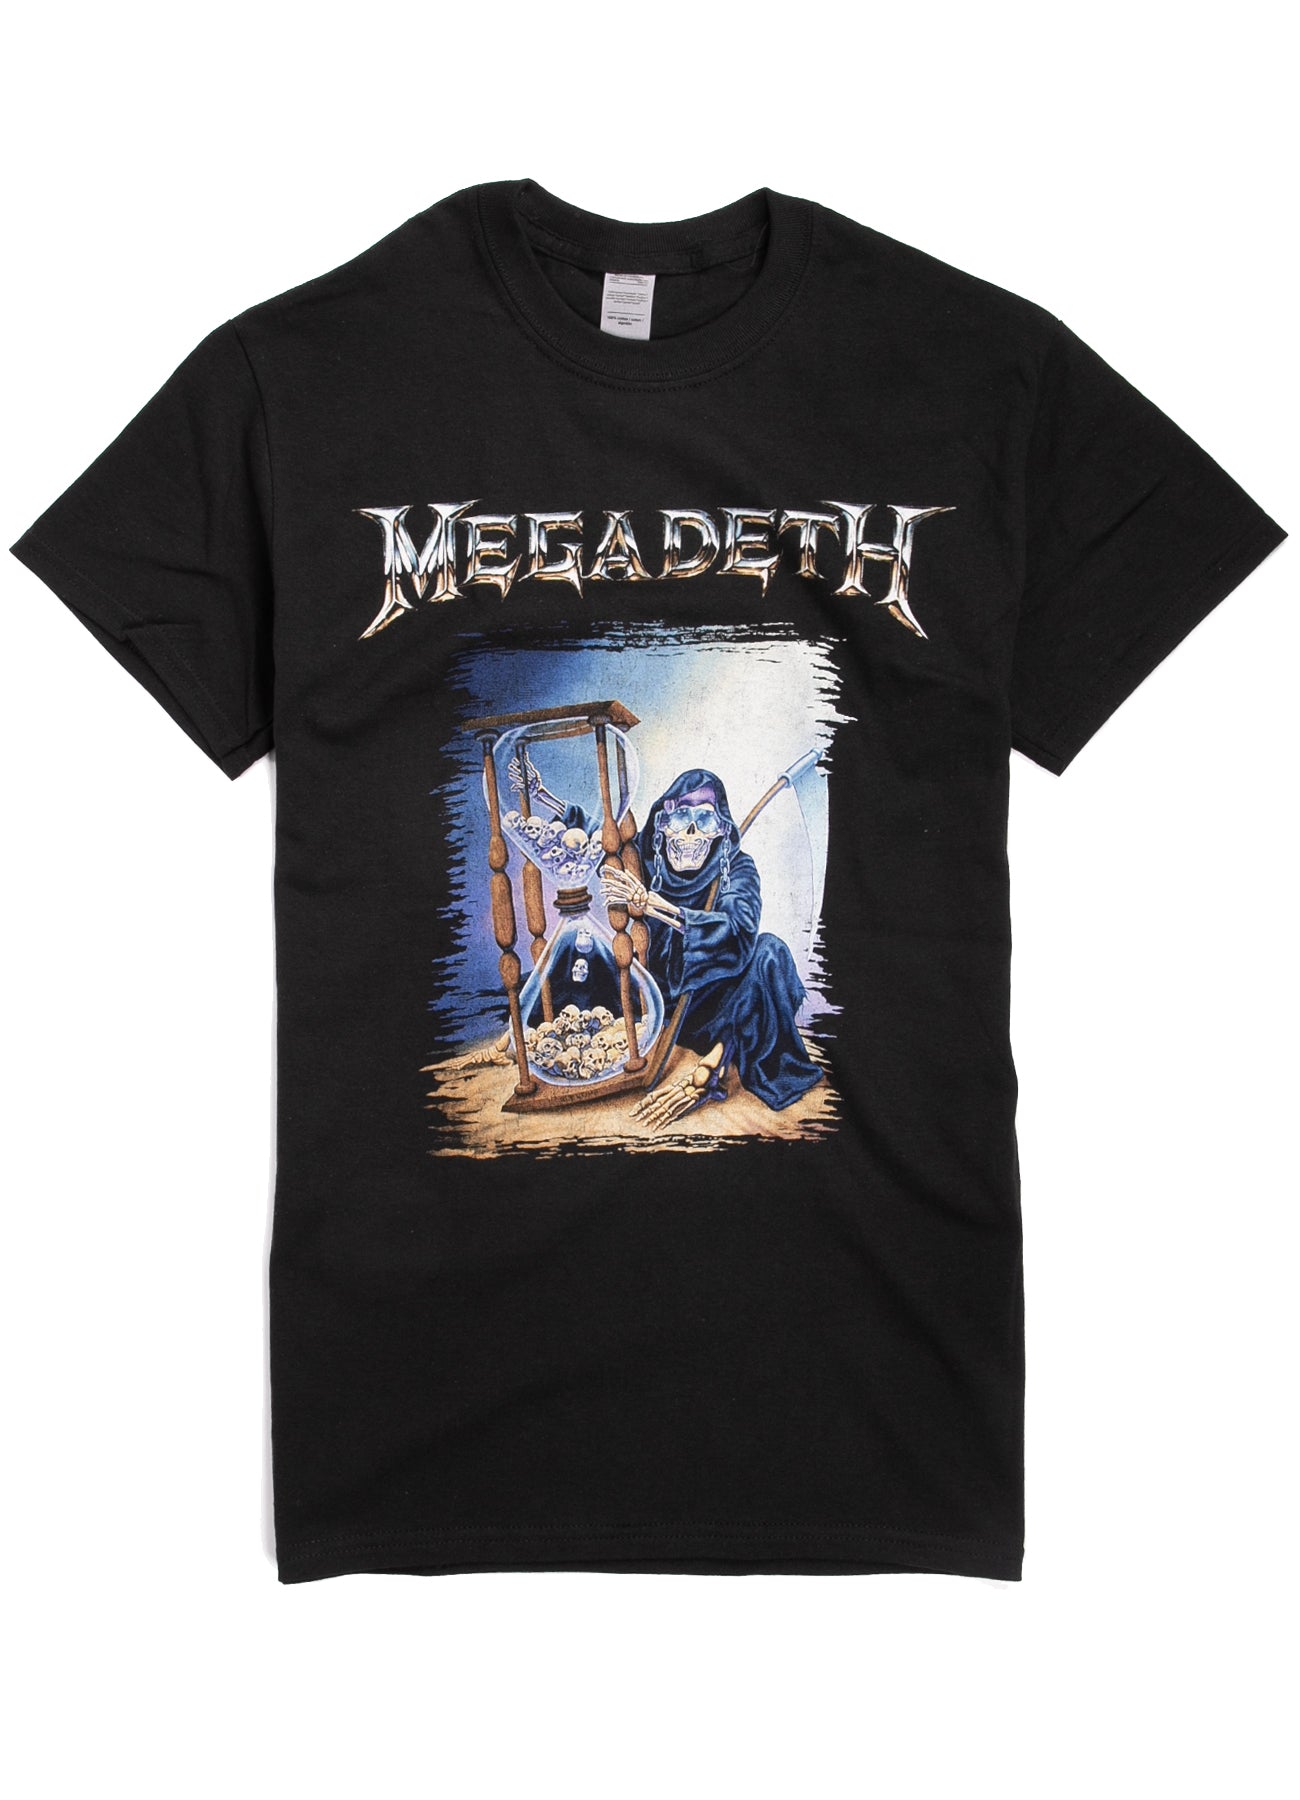 Megadeth T-Shirt - Countdown Hourglass - Black (Blue)